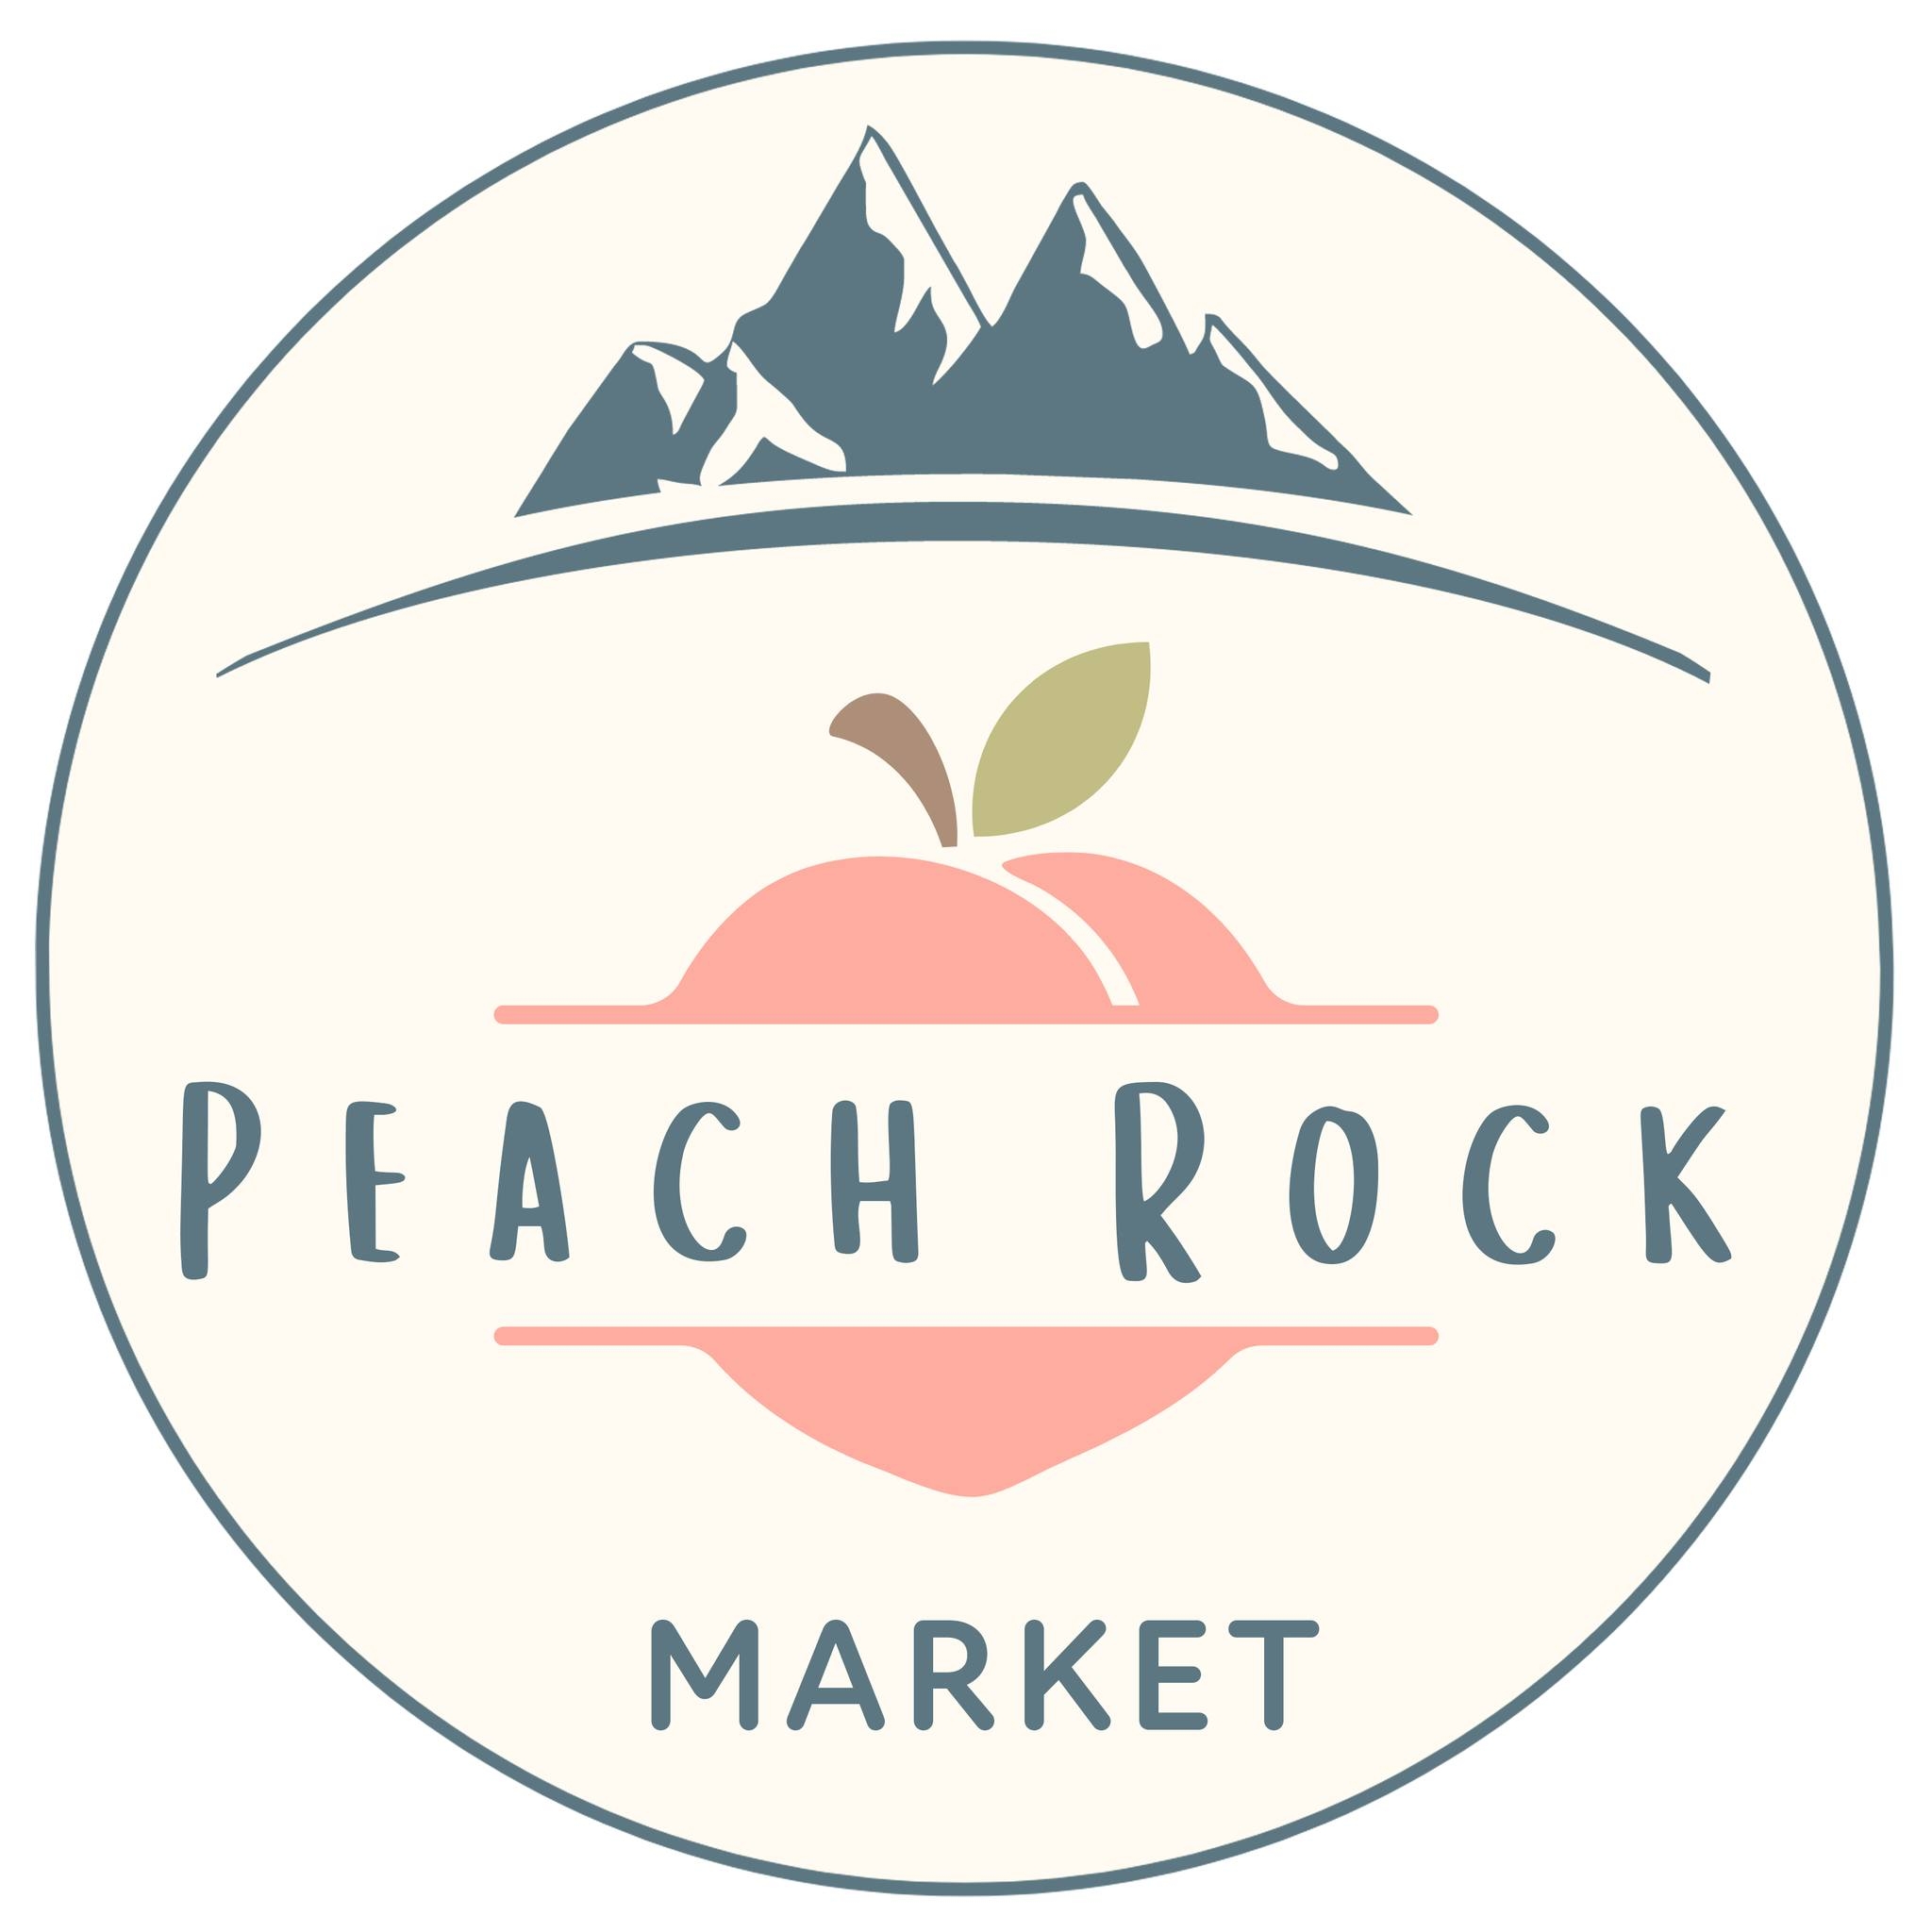 Peach Rock Mountain logo of a peach and mountains